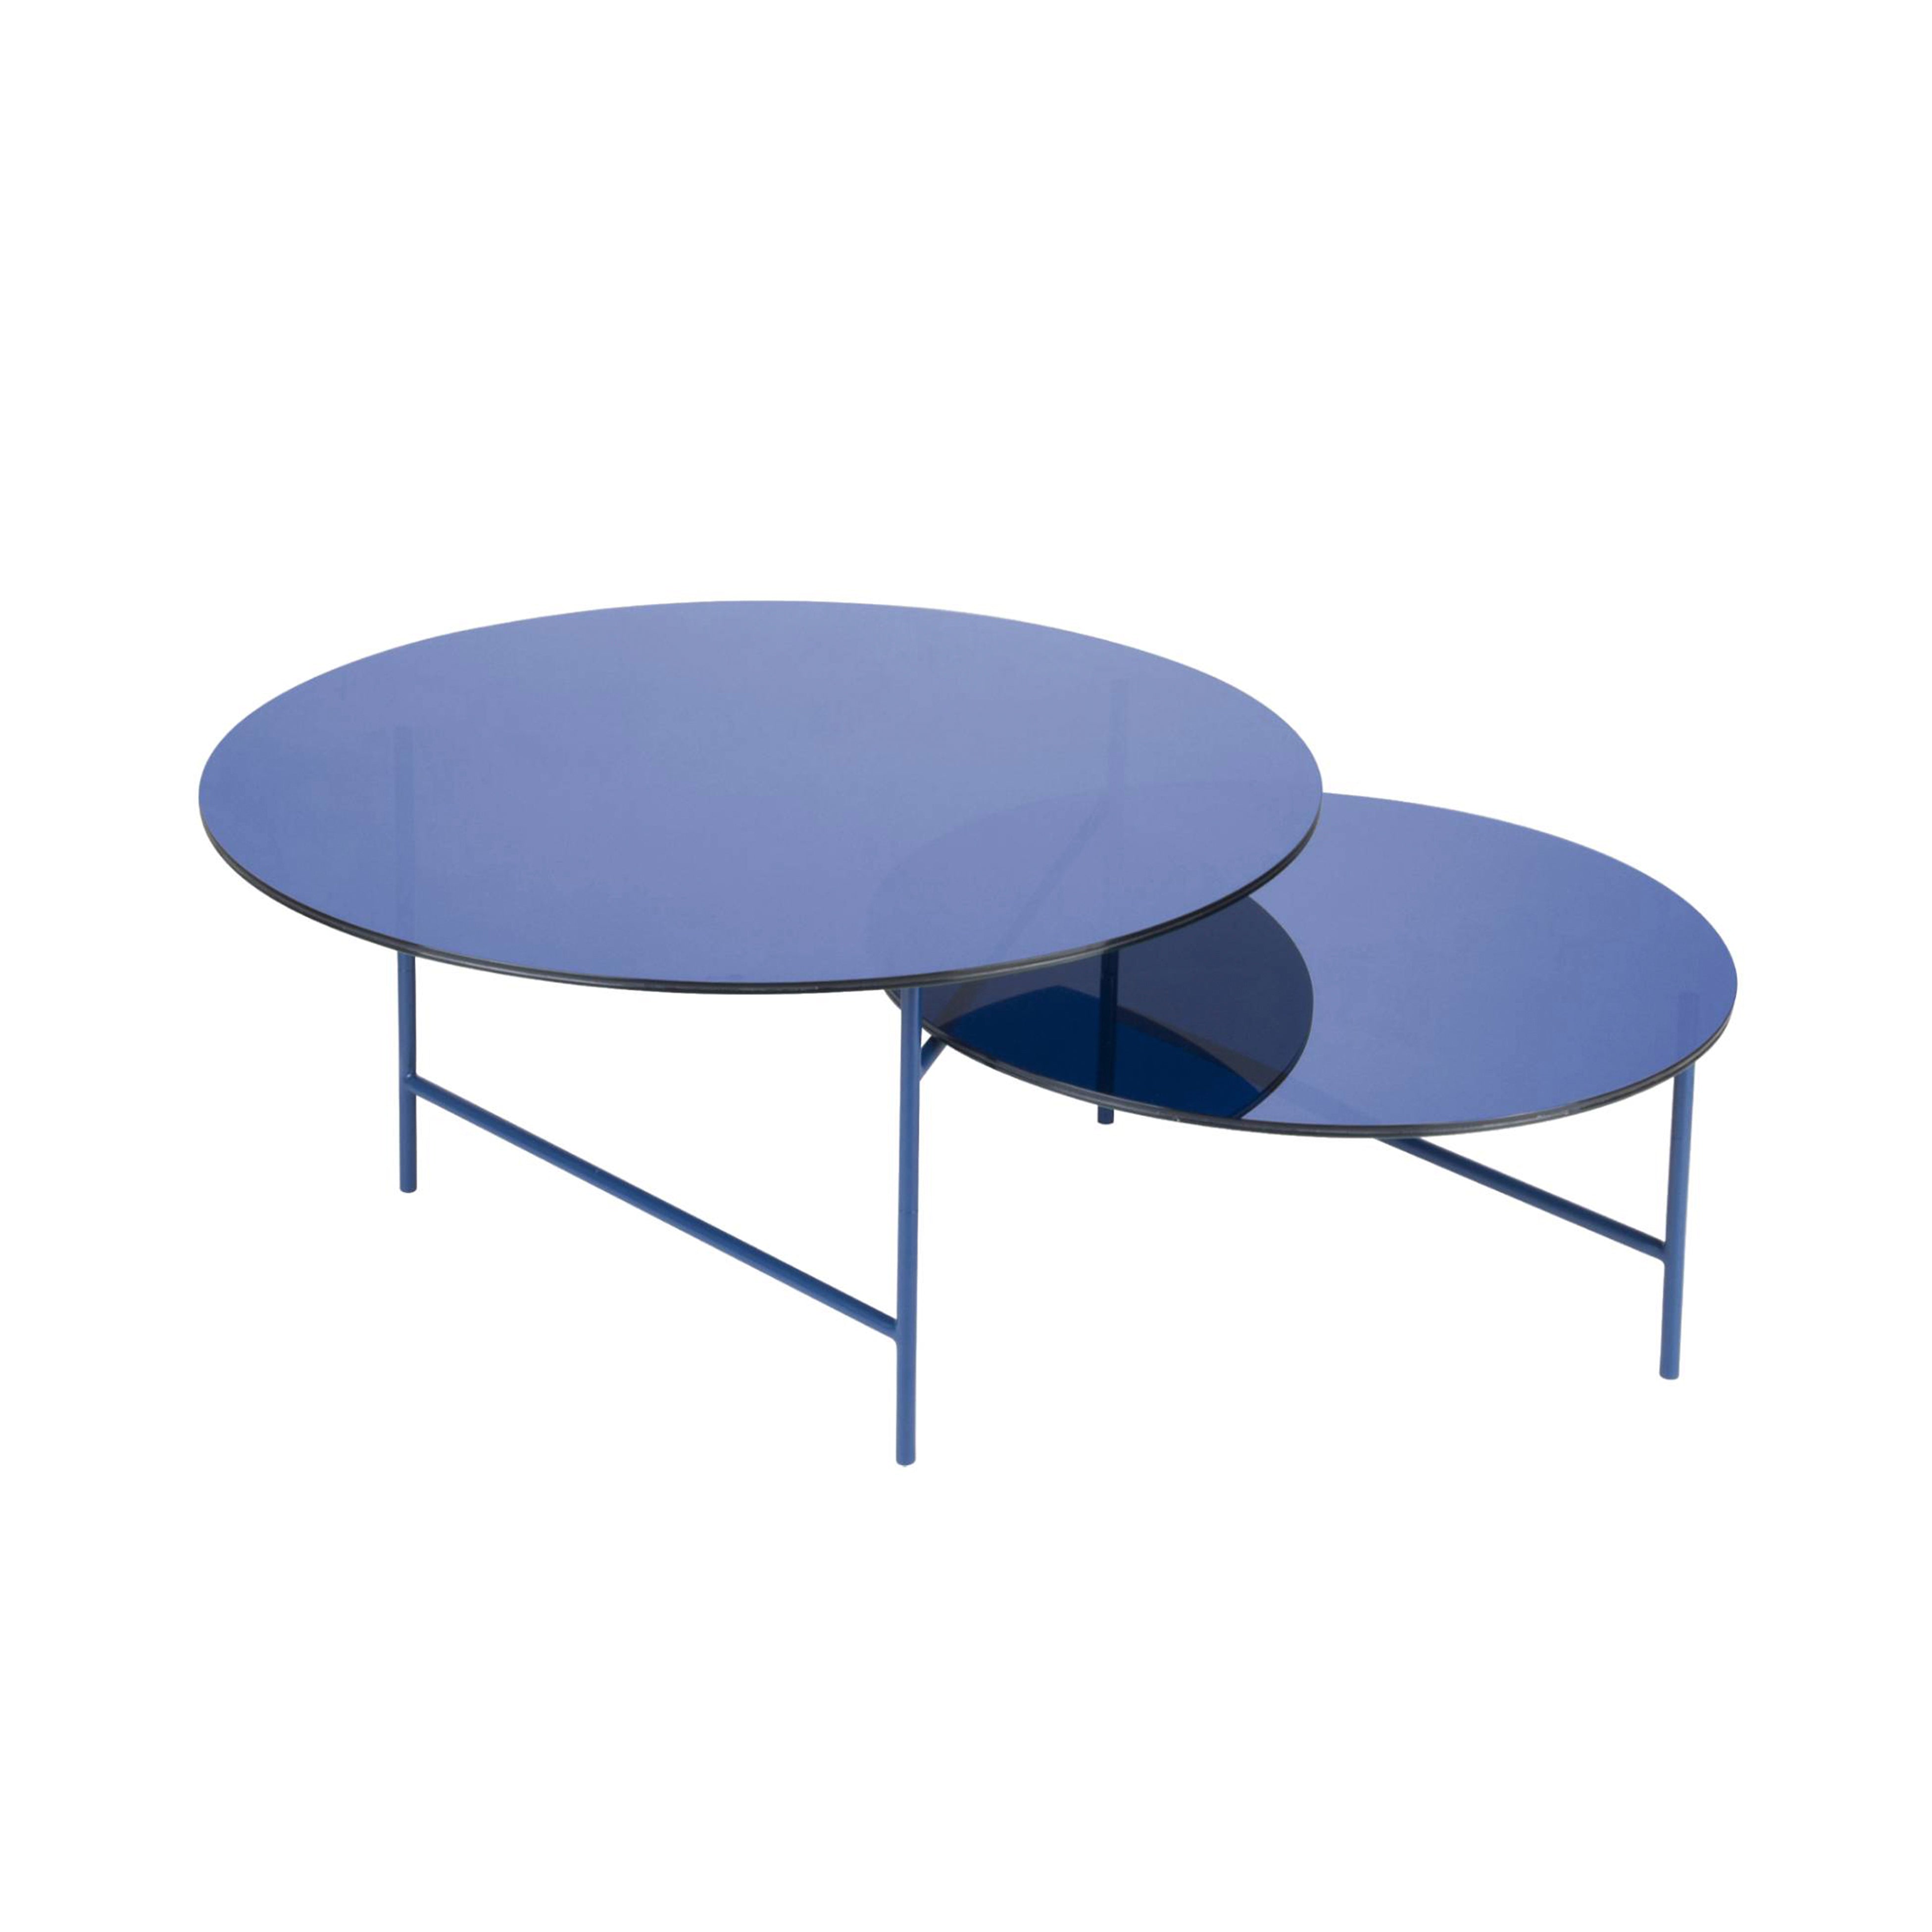 Zorro Coffee Table: Blue Glass + Blue Textured